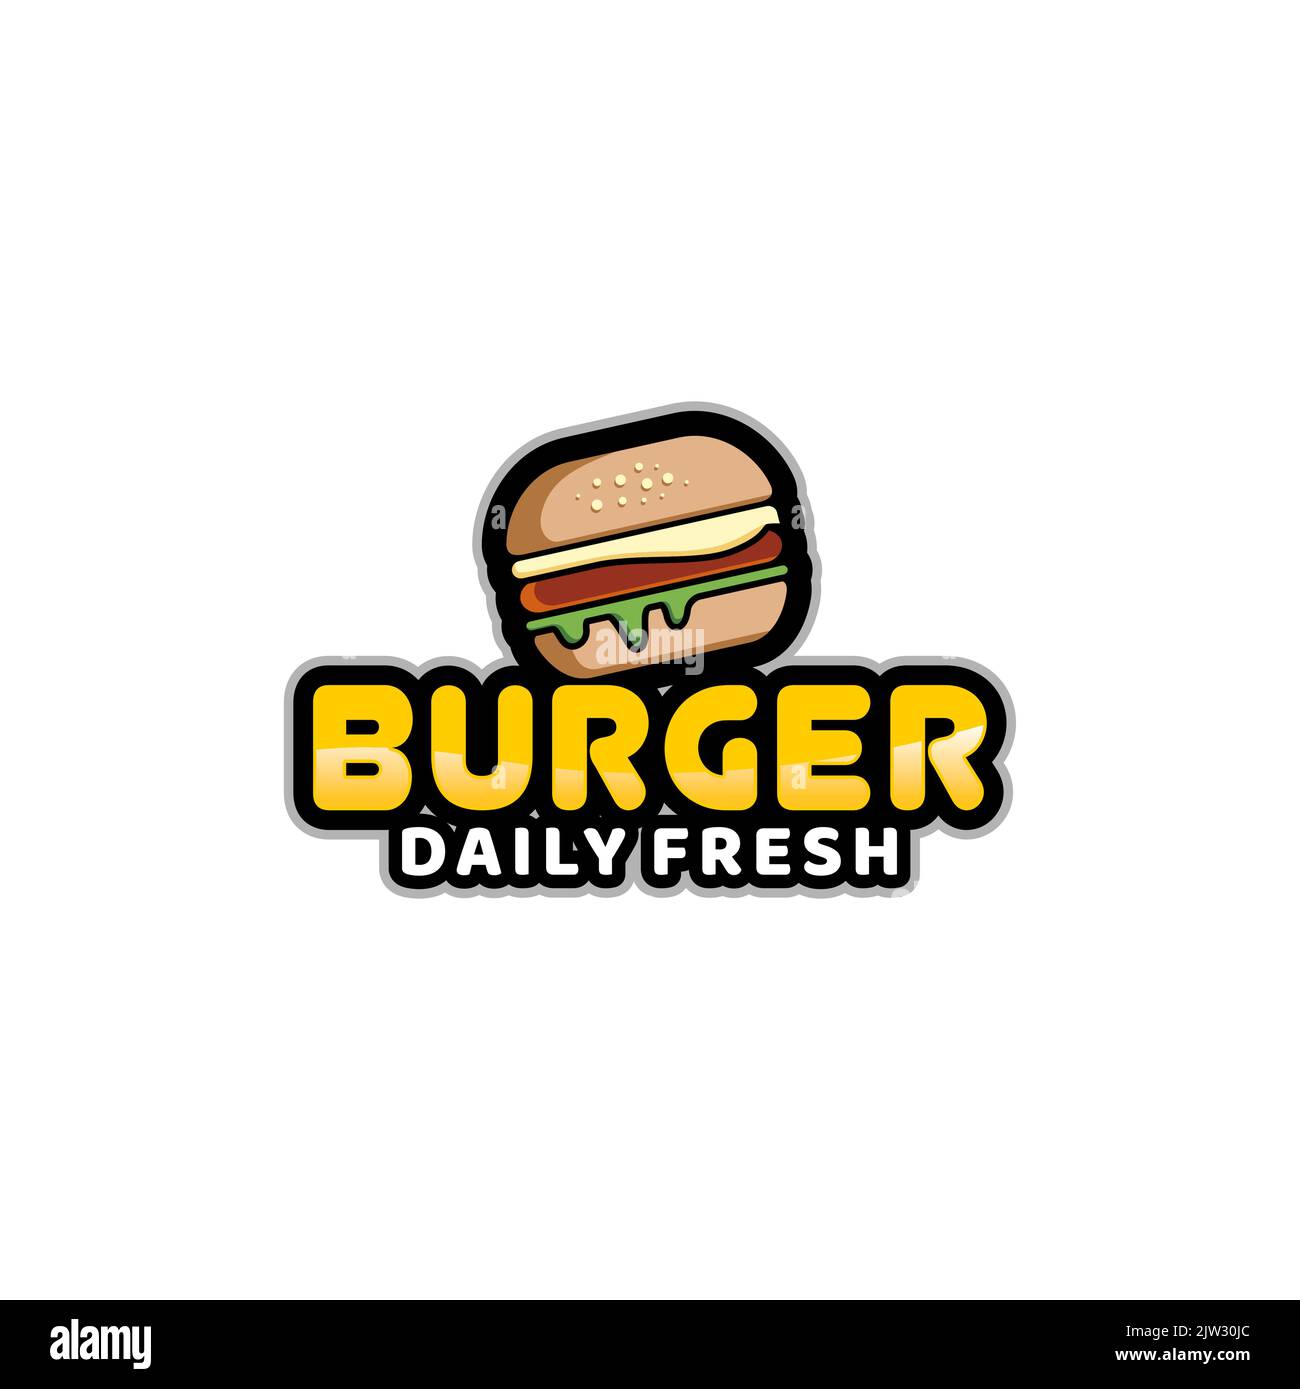 Burger Hamburger Vector Design Clip Art For Fast Food Restaurant Label Logo Stock Vector